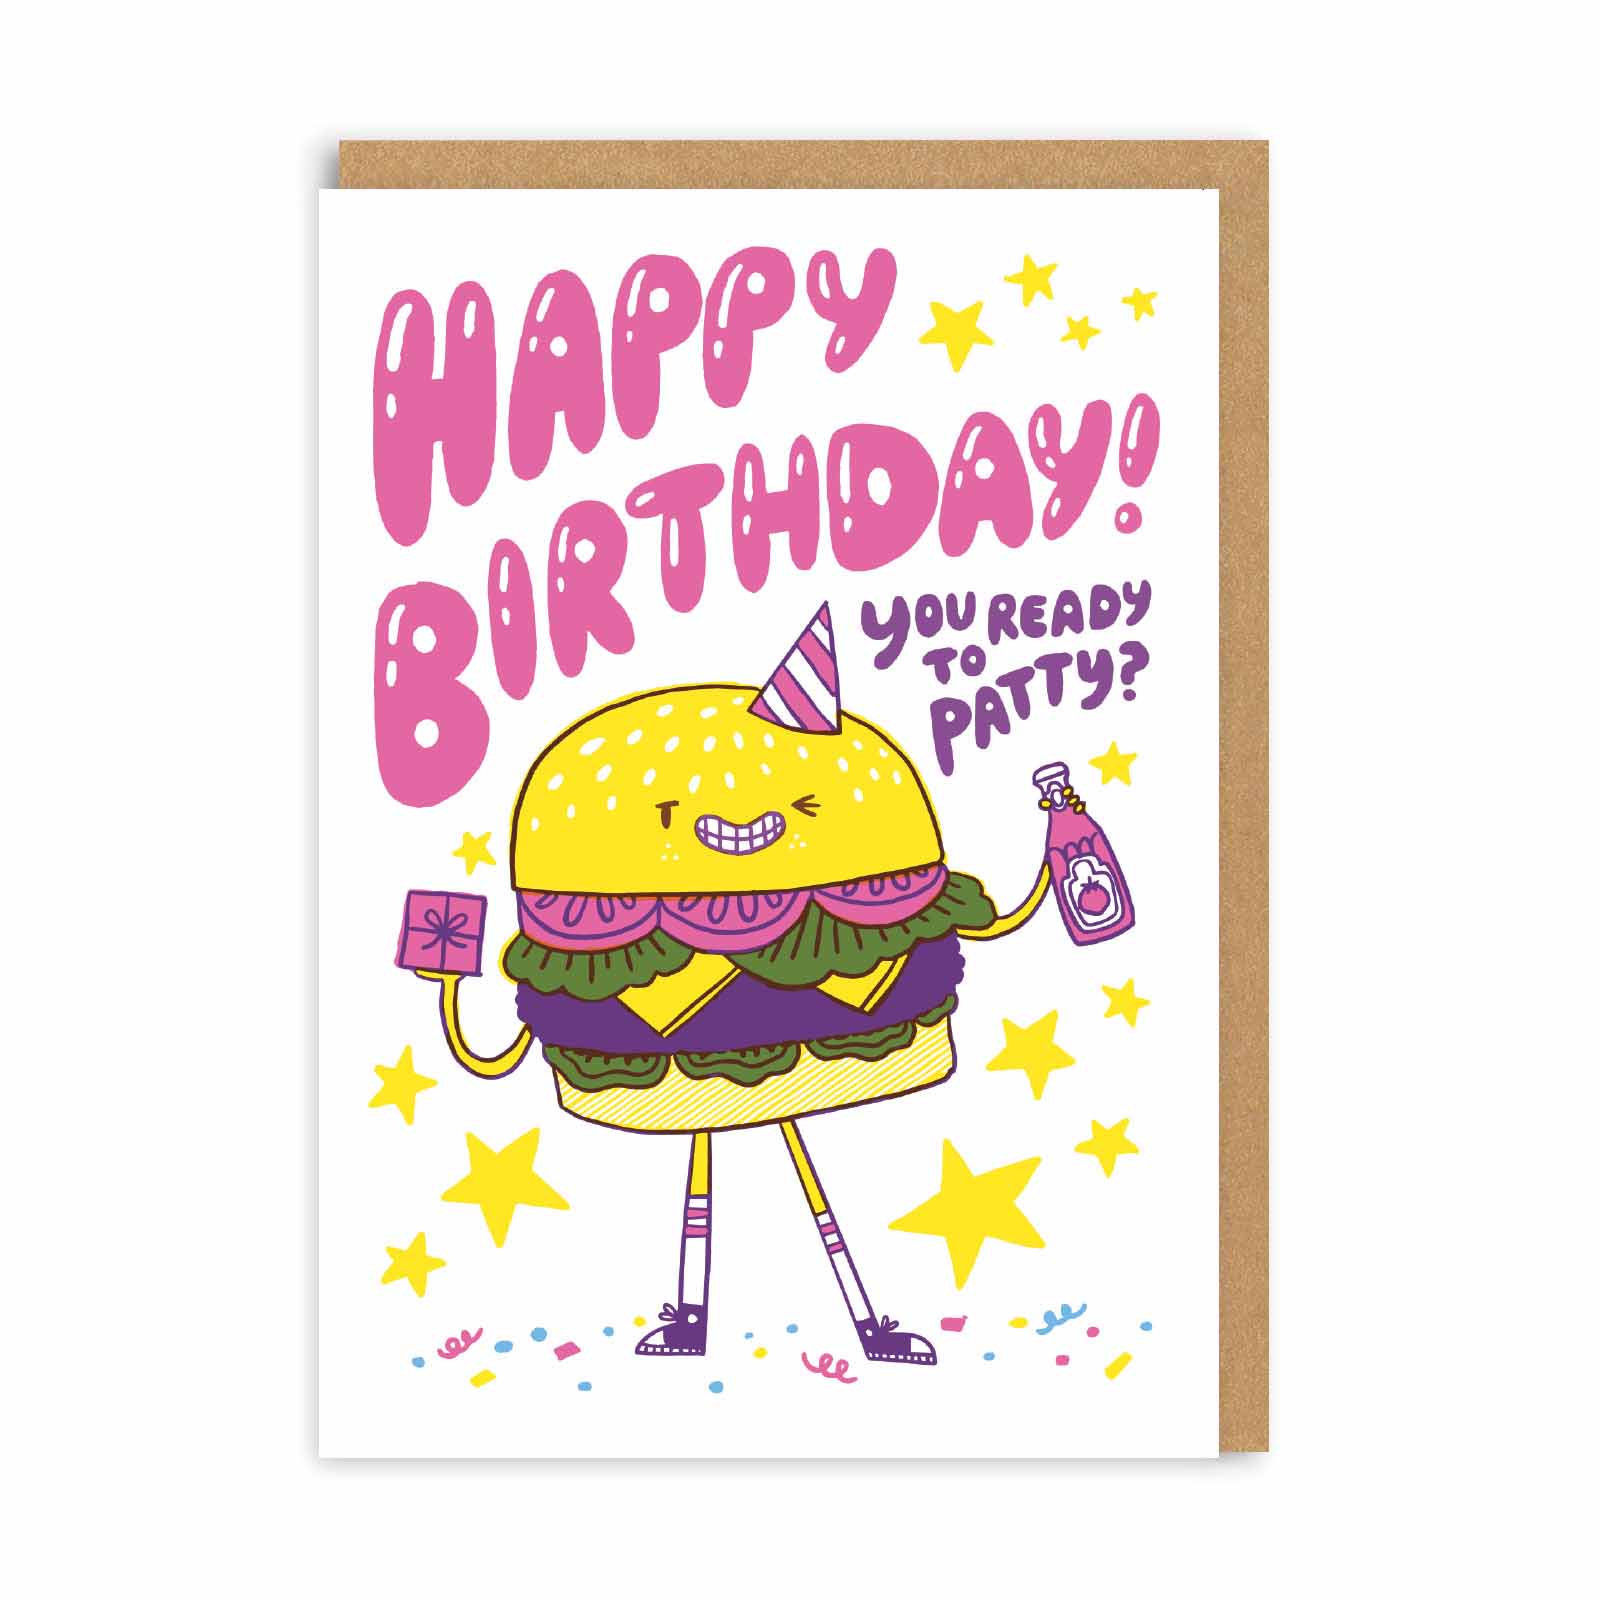 You Ready To Patty? Birthday Card